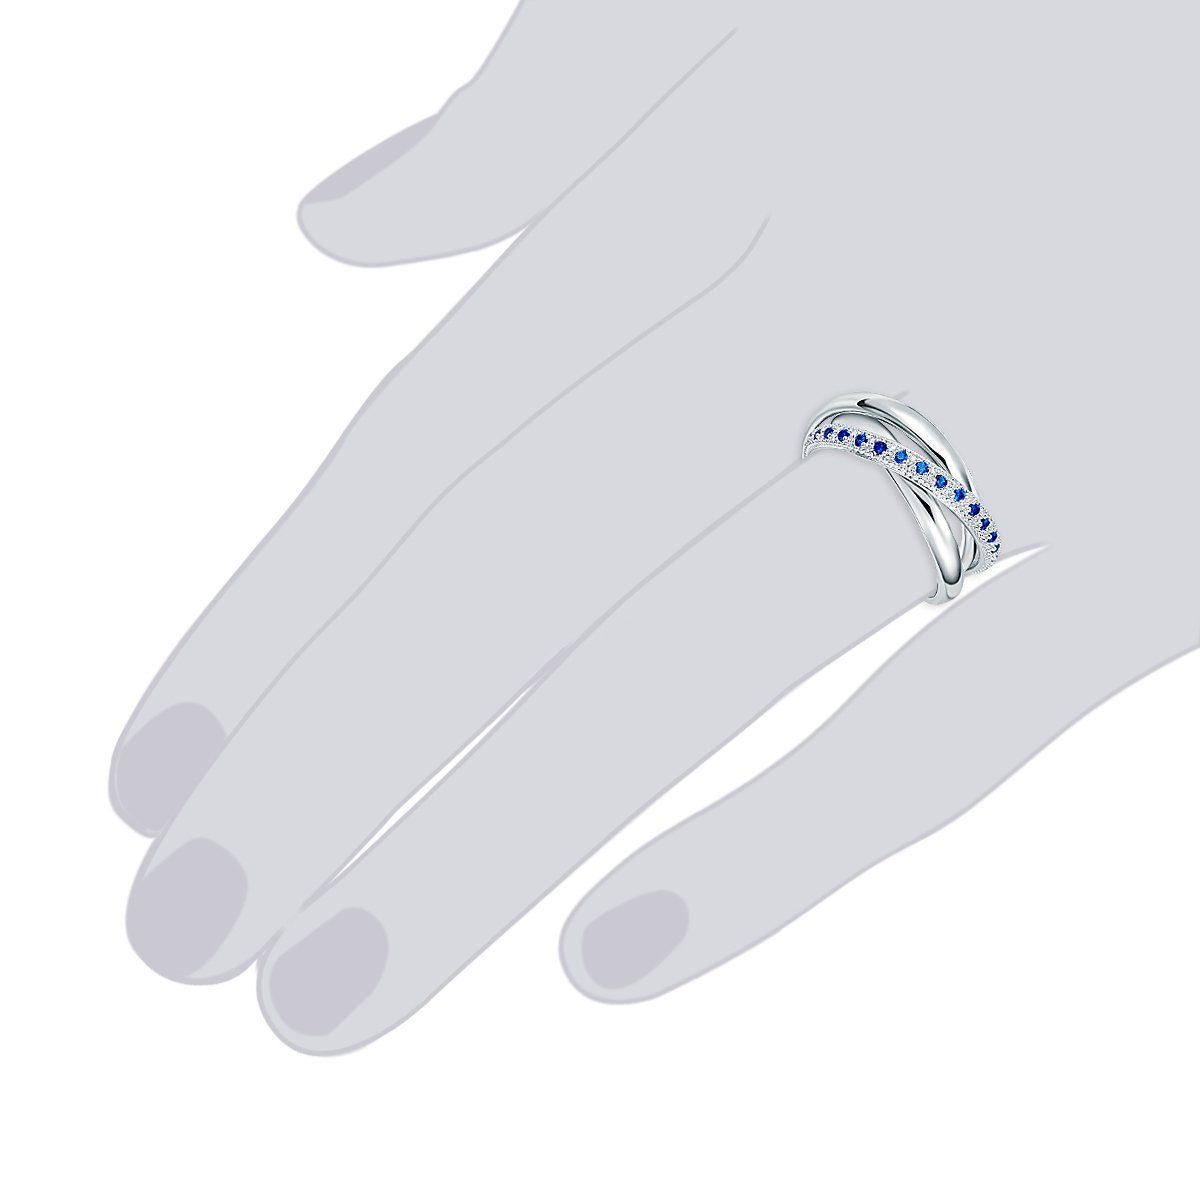 Lulu & Jane Fingerring blau Zirkonia Ring